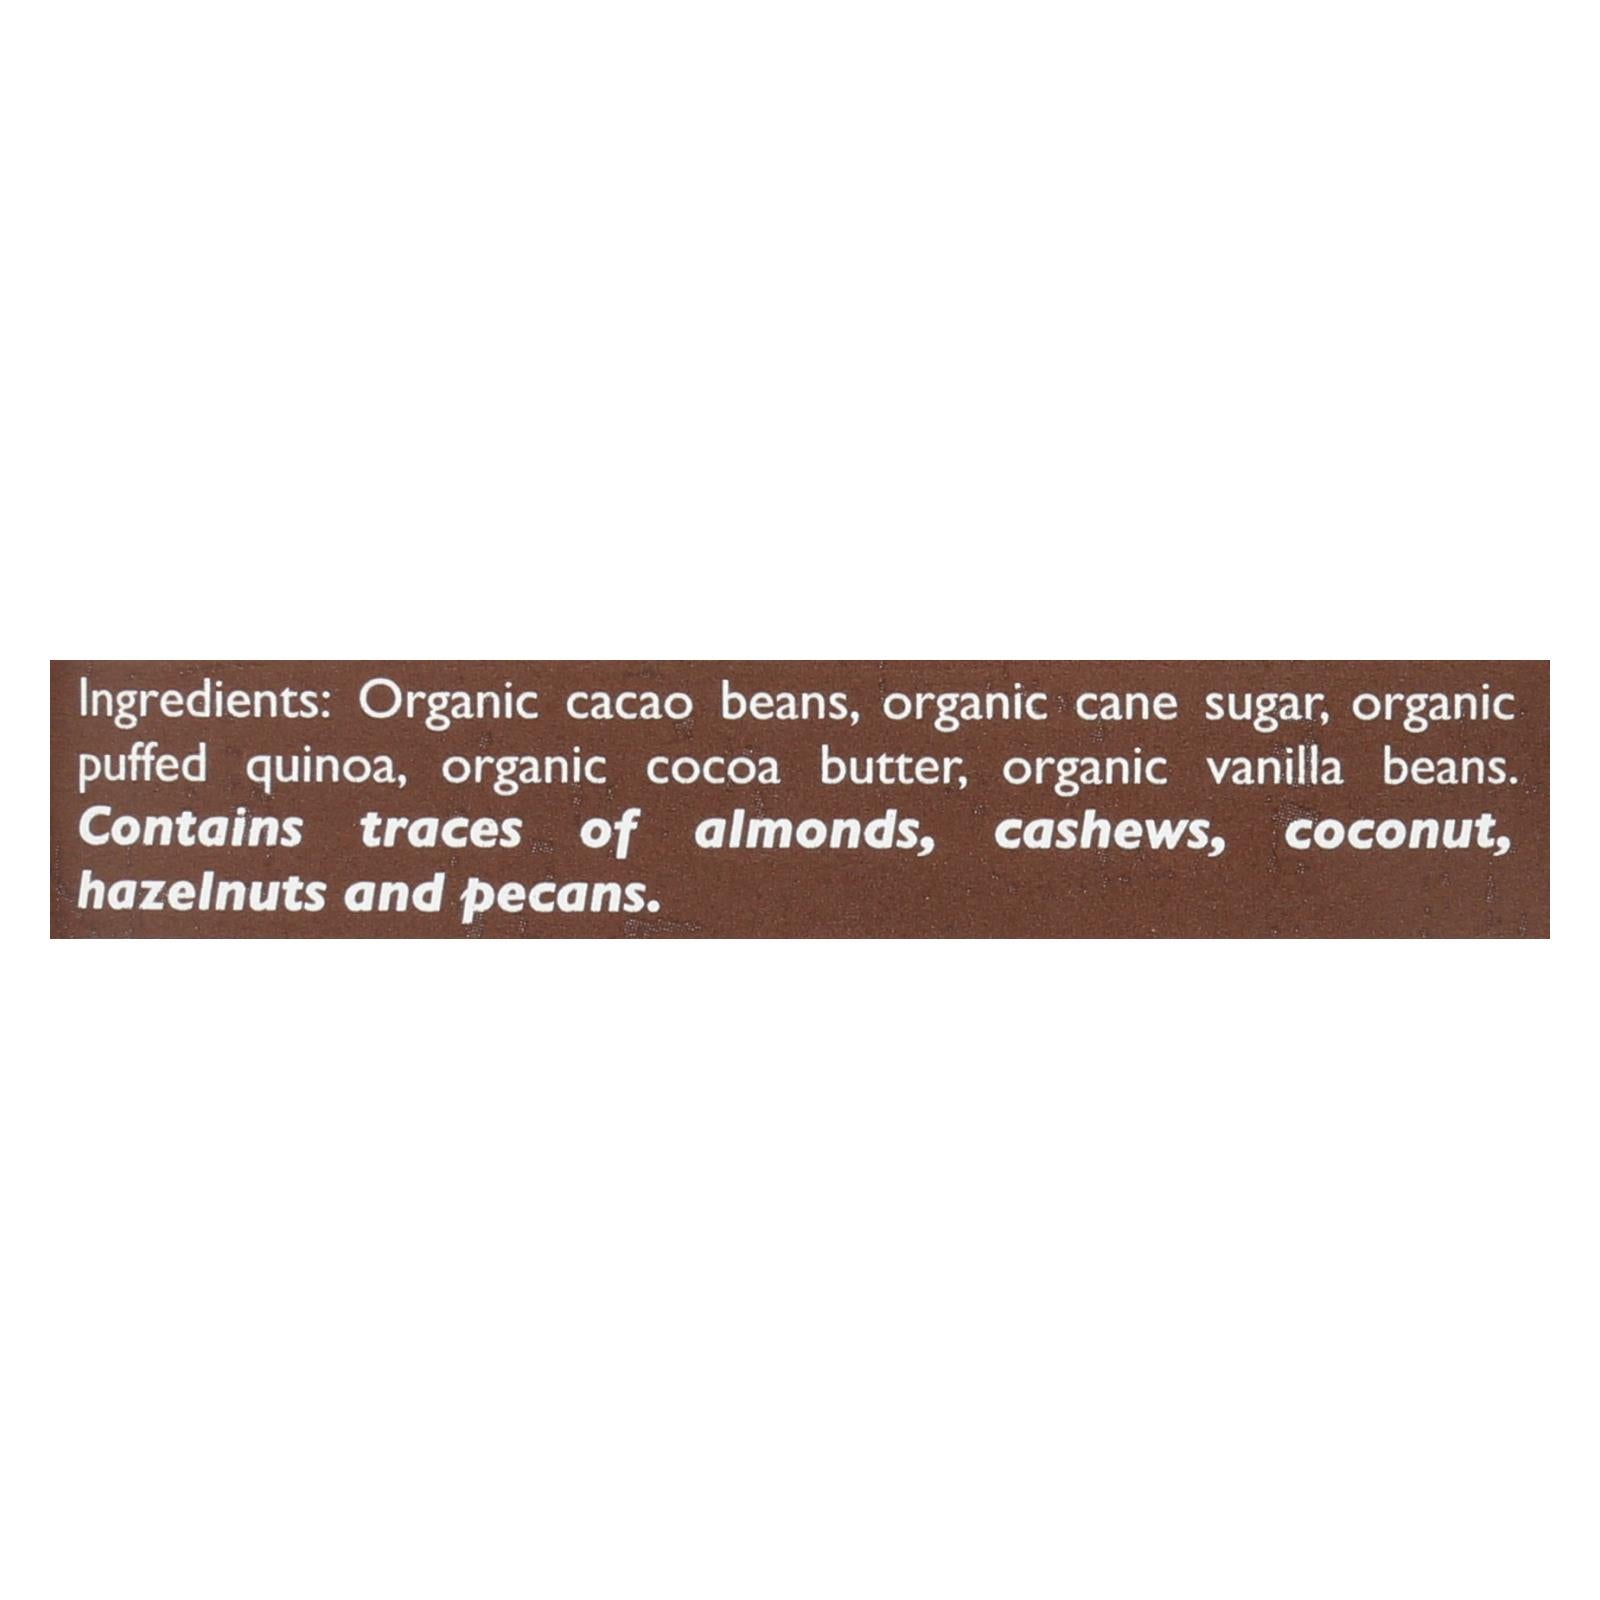 Taza Chocolate Stone Ground Organic Dark Chocolate Bar - Cacao Crunch - Case of 10 - 2.5 oz.